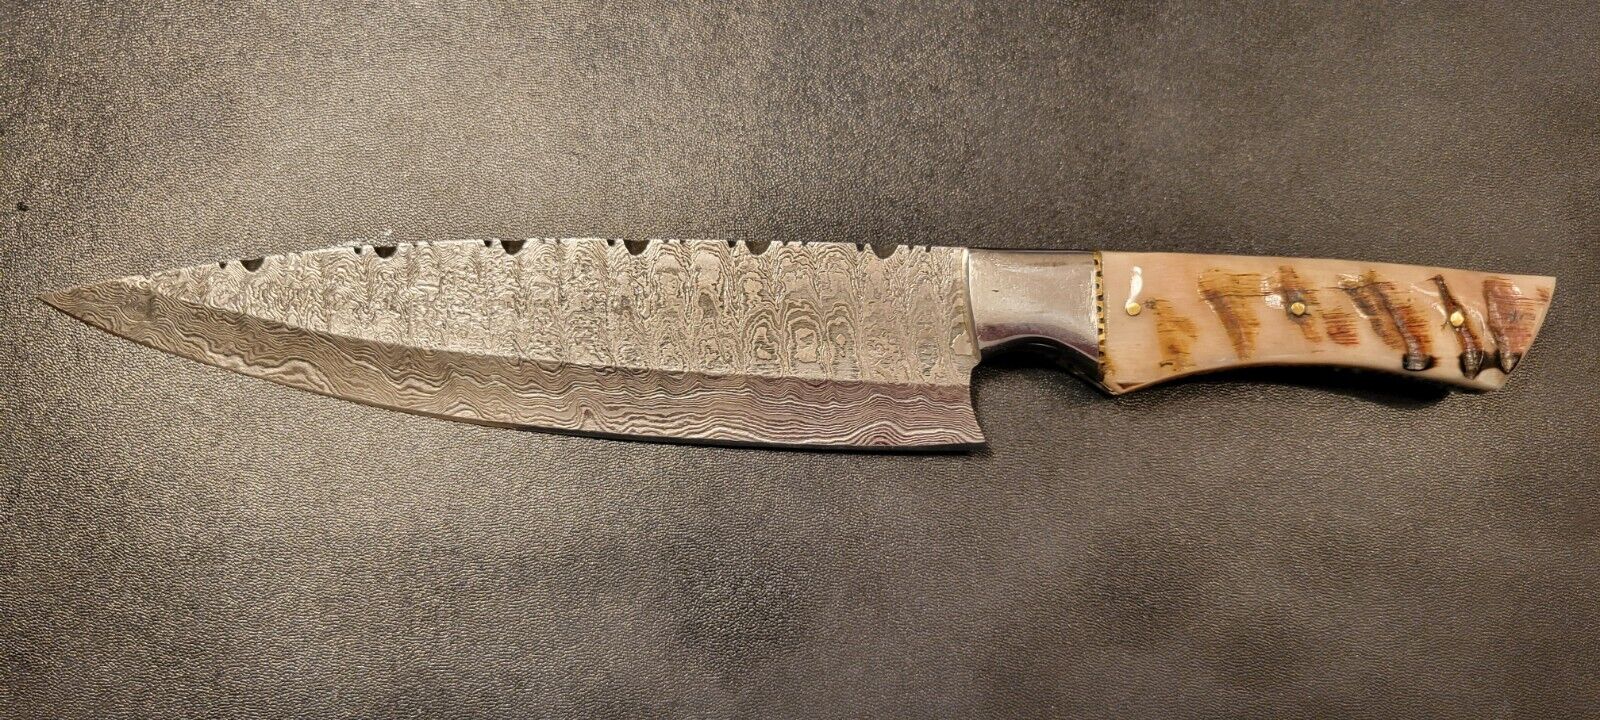 Baba Knives Handmade Damascus Steel Hunting Chef Knife Ram Horn Handle- BS4